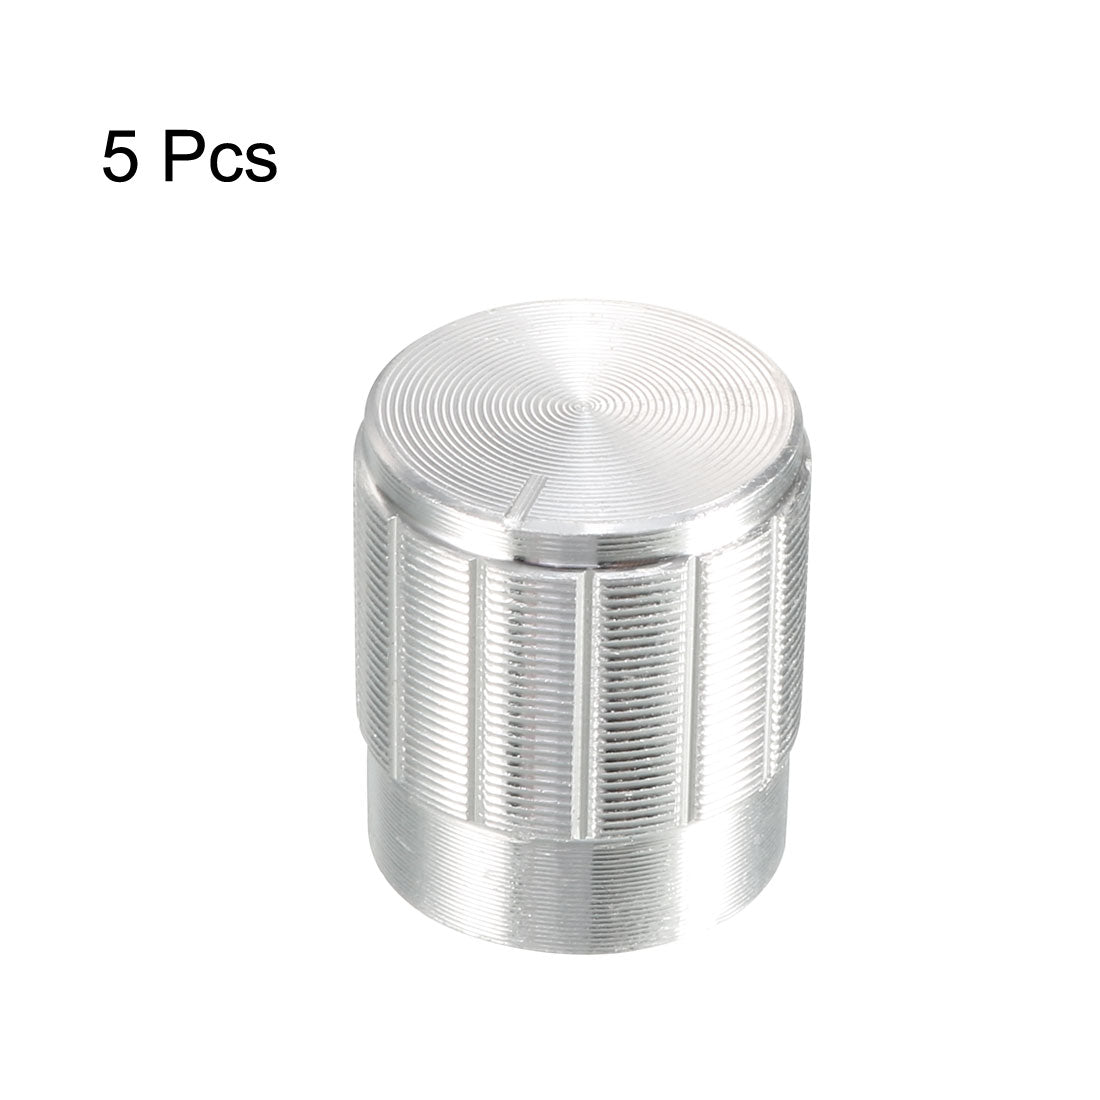 uxcell Uxcell 5Pcs 6mm Insert Shaft 16 x 15mm Aluminum Alloy Potentiometer Rotary Knob Pots